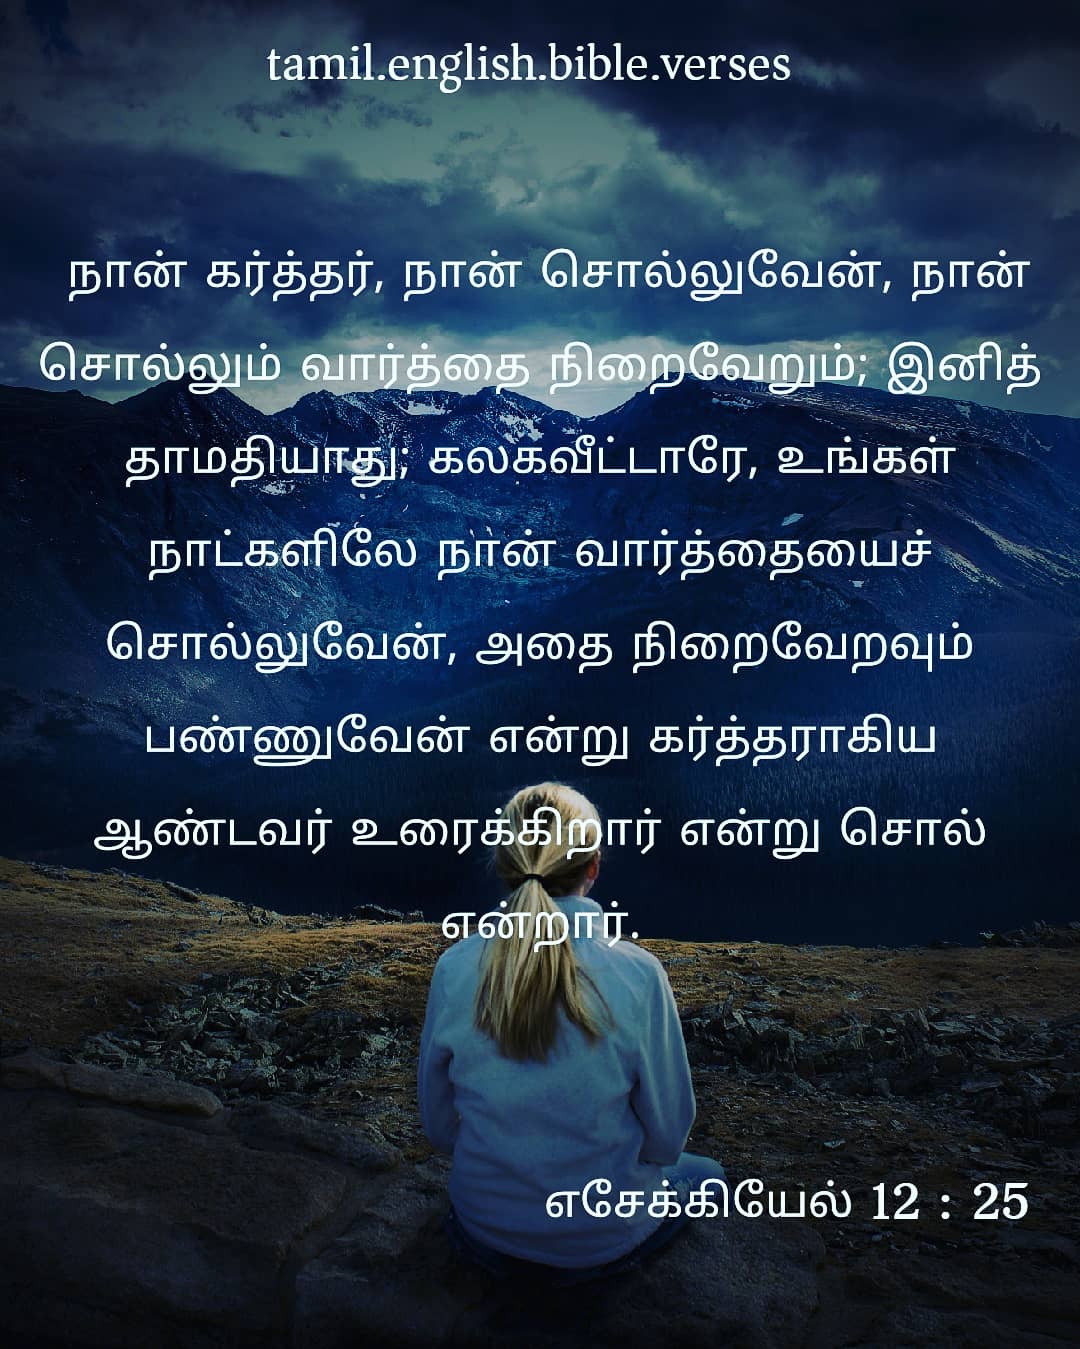 Tamil ENGLISH BIBLE VERSES on Twitter: 